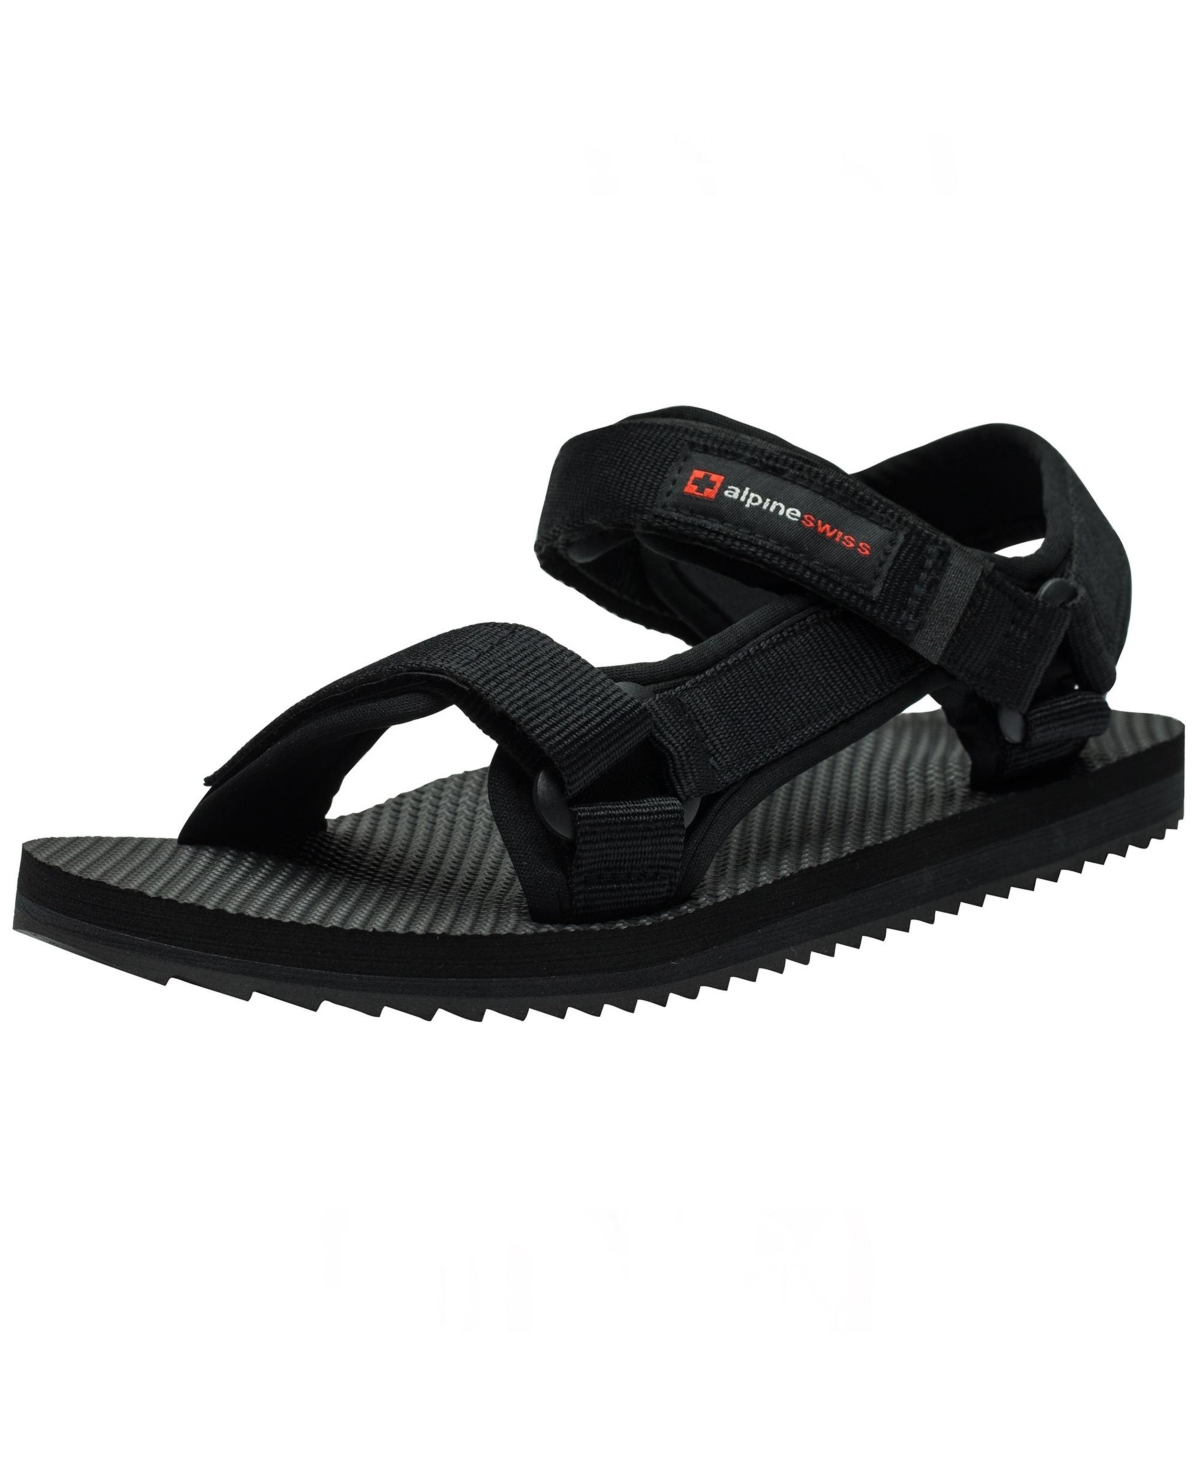 Mens Sport Sandals Athletic Open Toe Outdoor Comfort Walking Shoes - Black